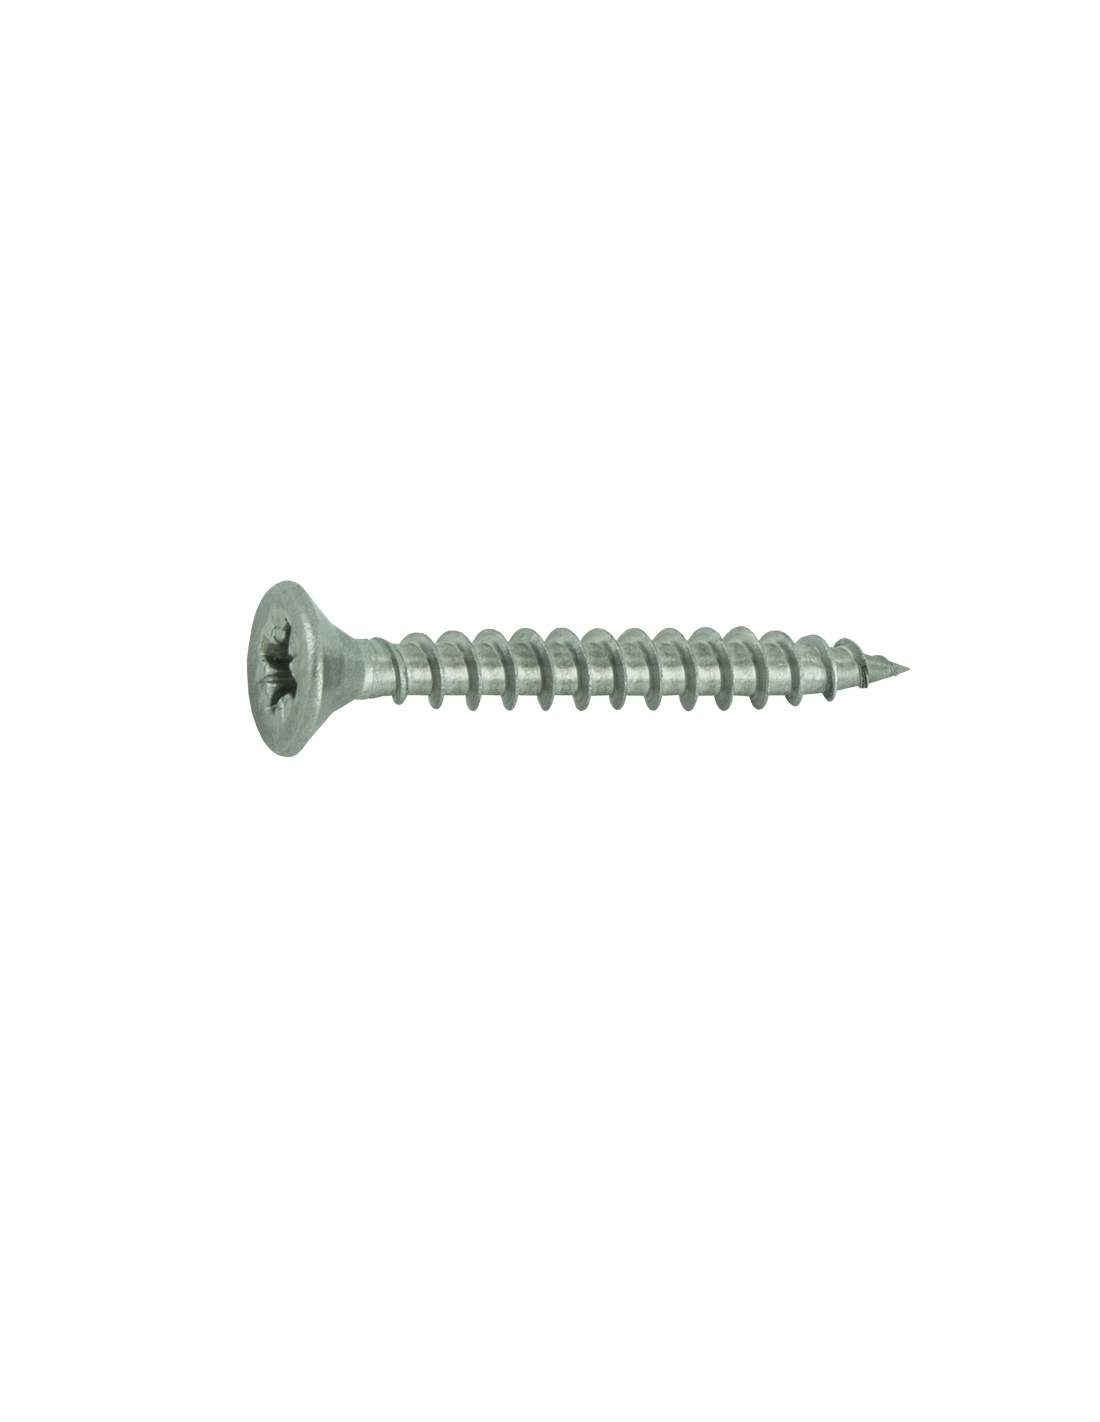 Pozidriv countersunk stainless steel screws A2 5x60, 8 pcs.